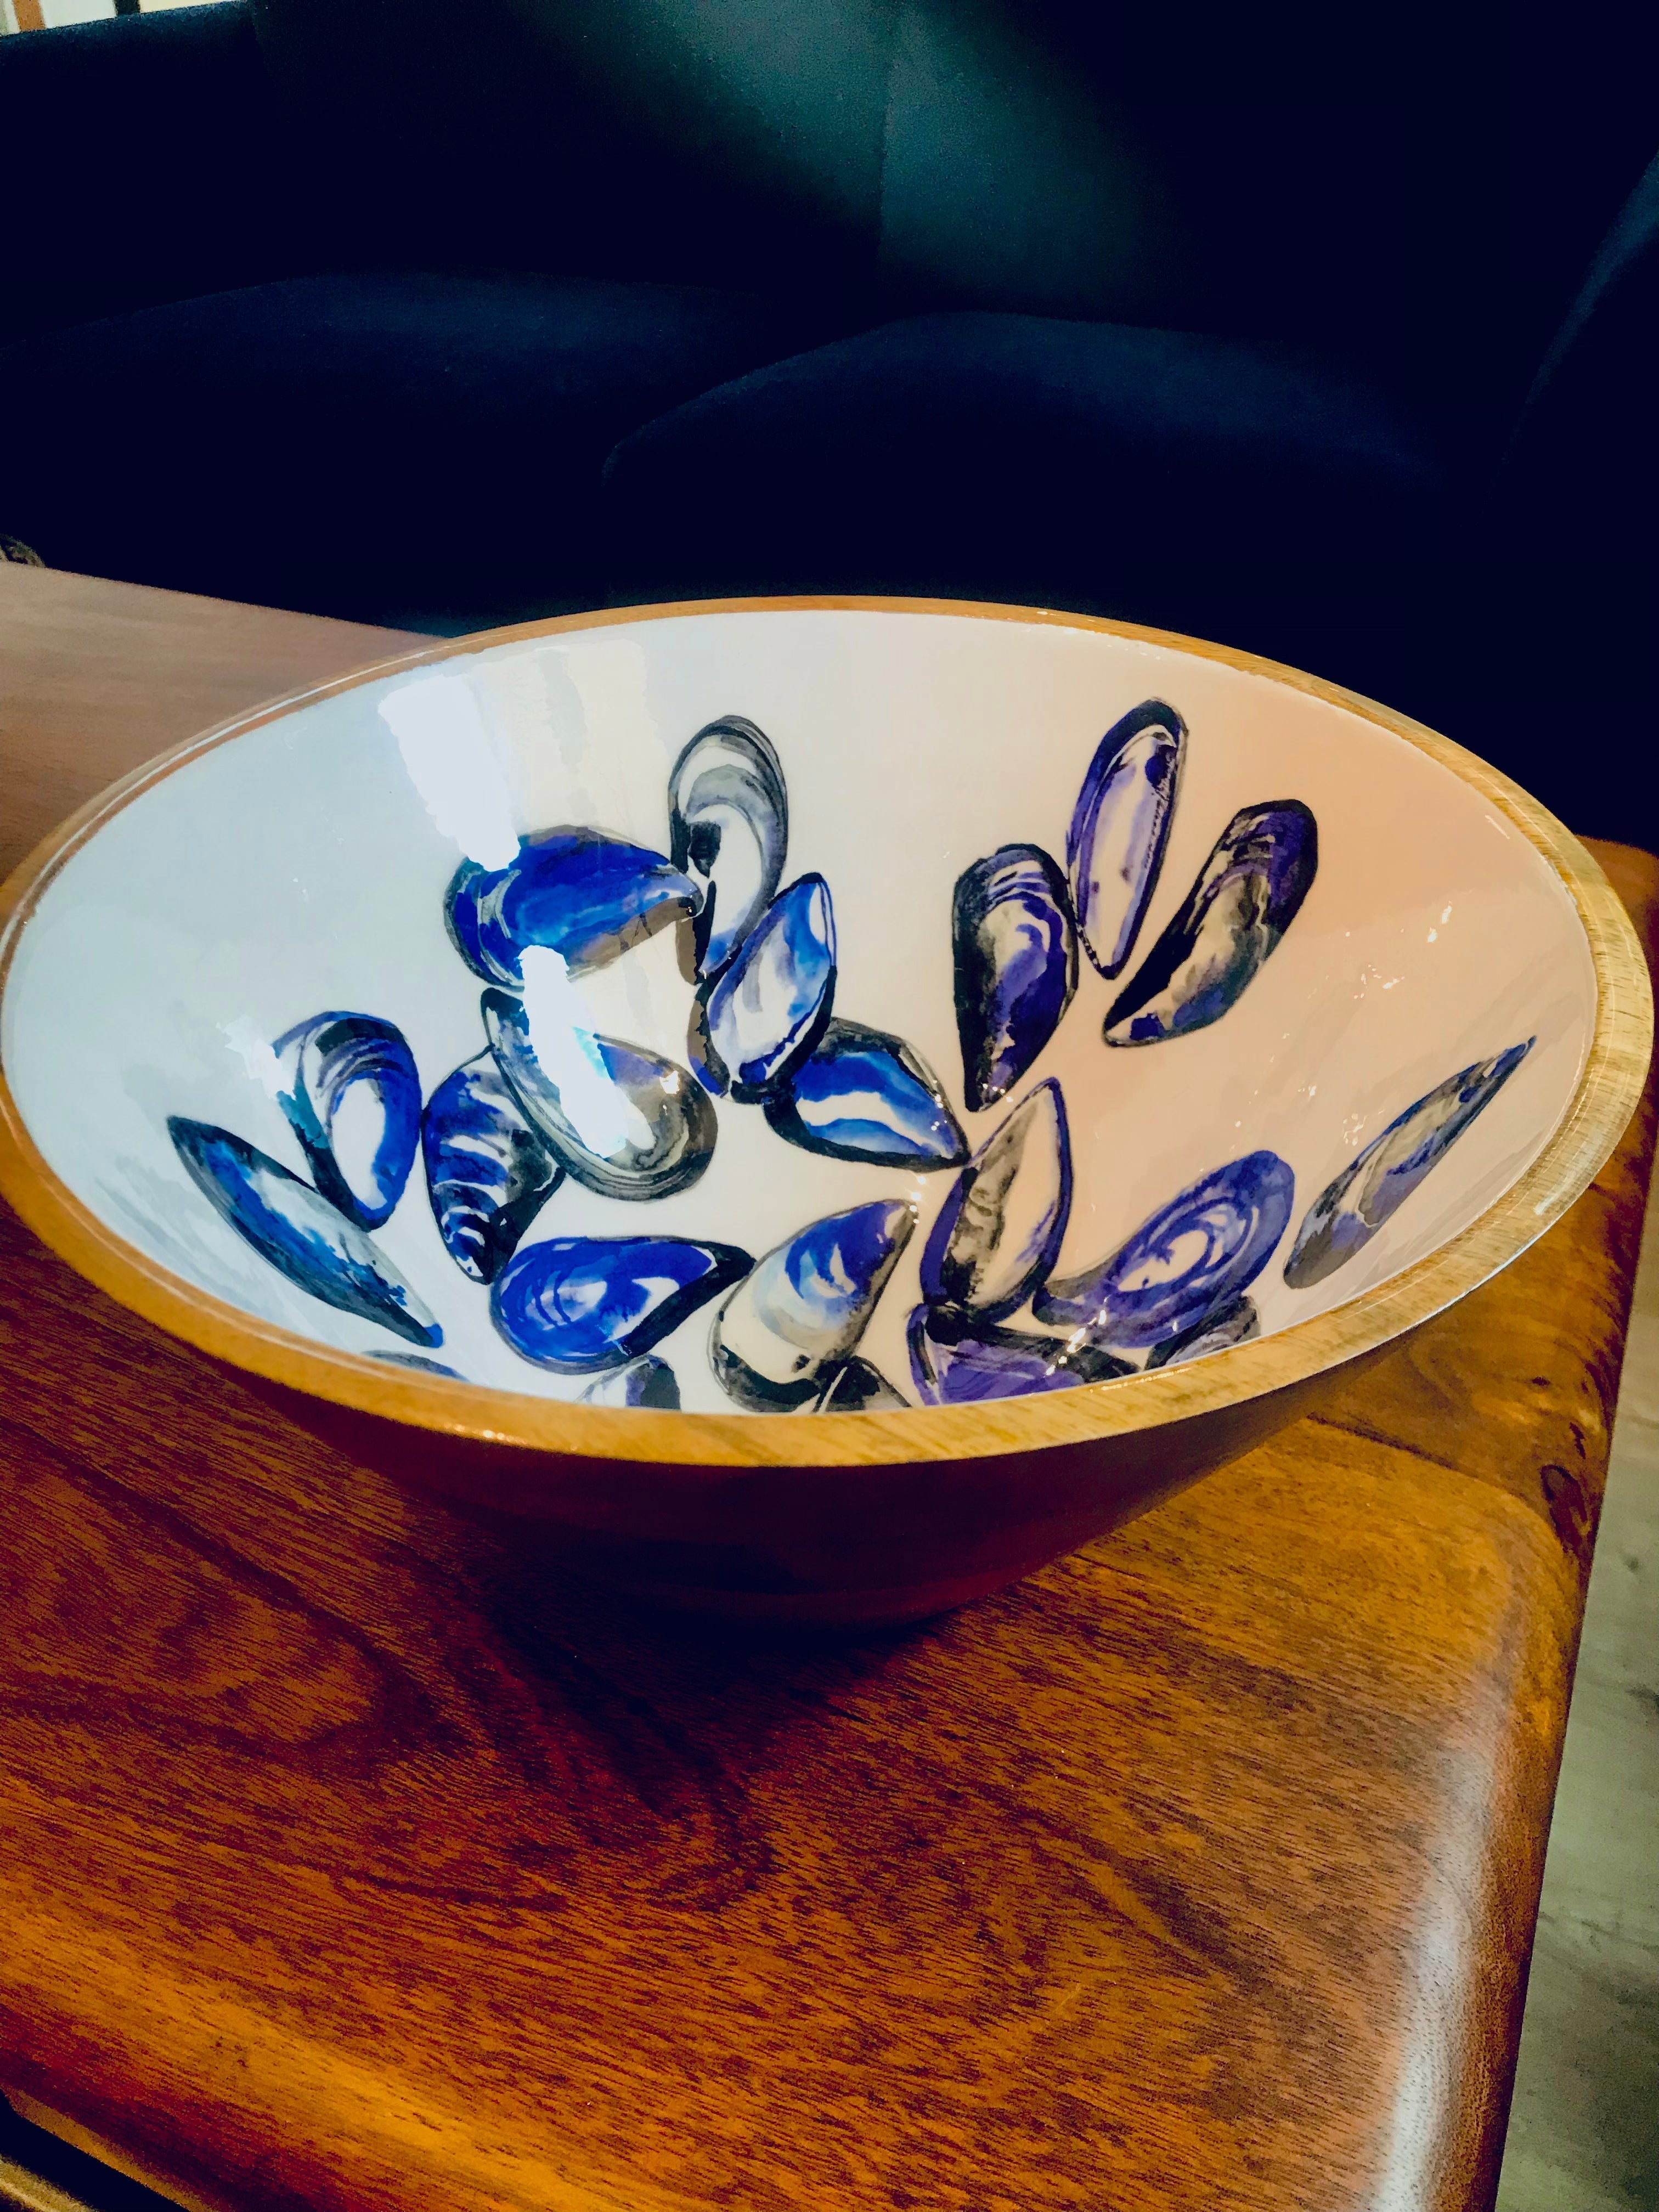 30cm Mussel Wooden Bowl - The Nancy Smillie Shop - Art, Jewellery & Designer Gifts Glasgow